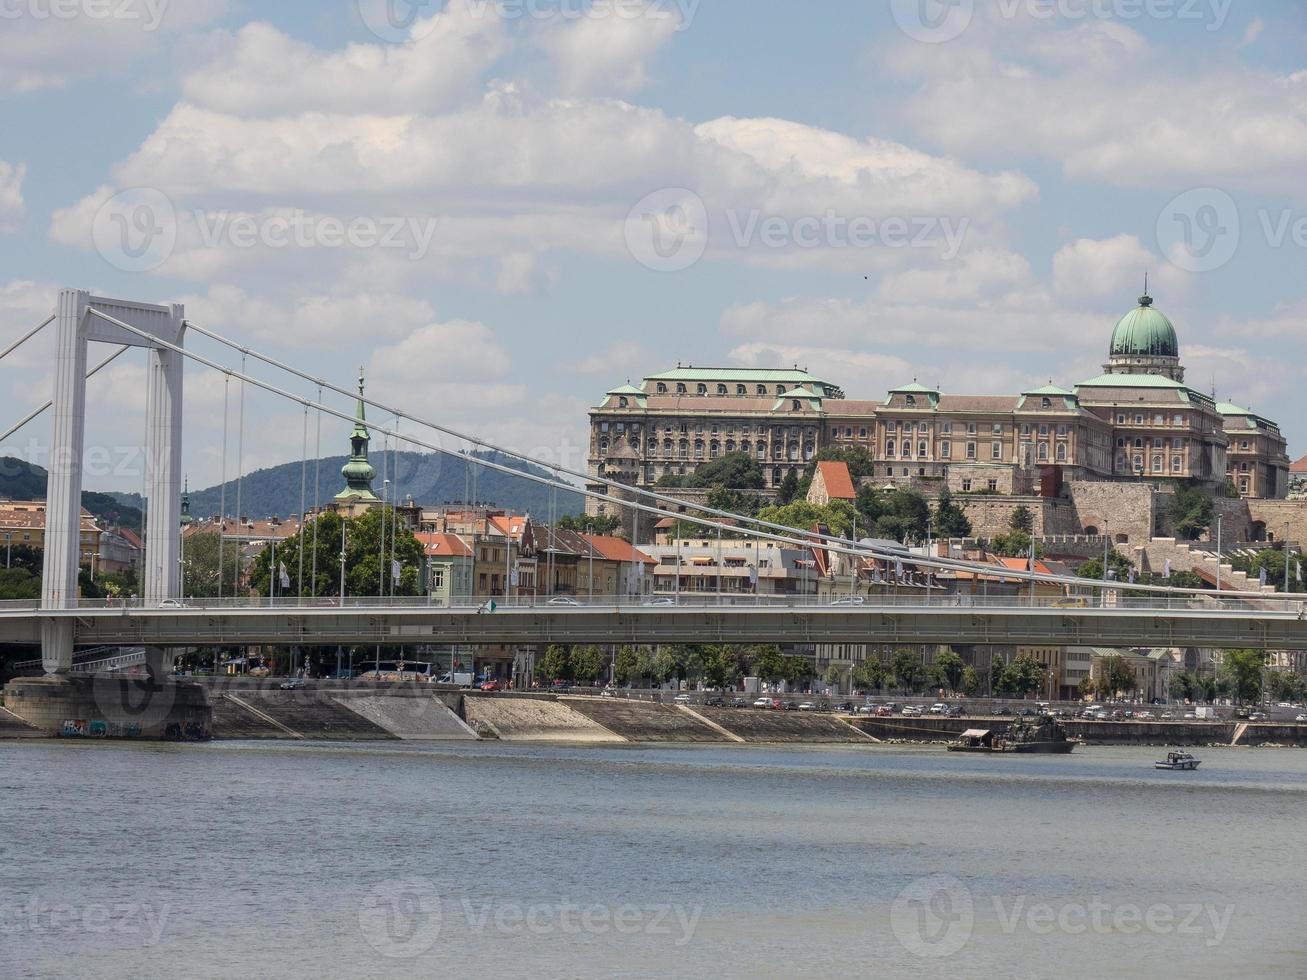 Budapest an der Donau foto